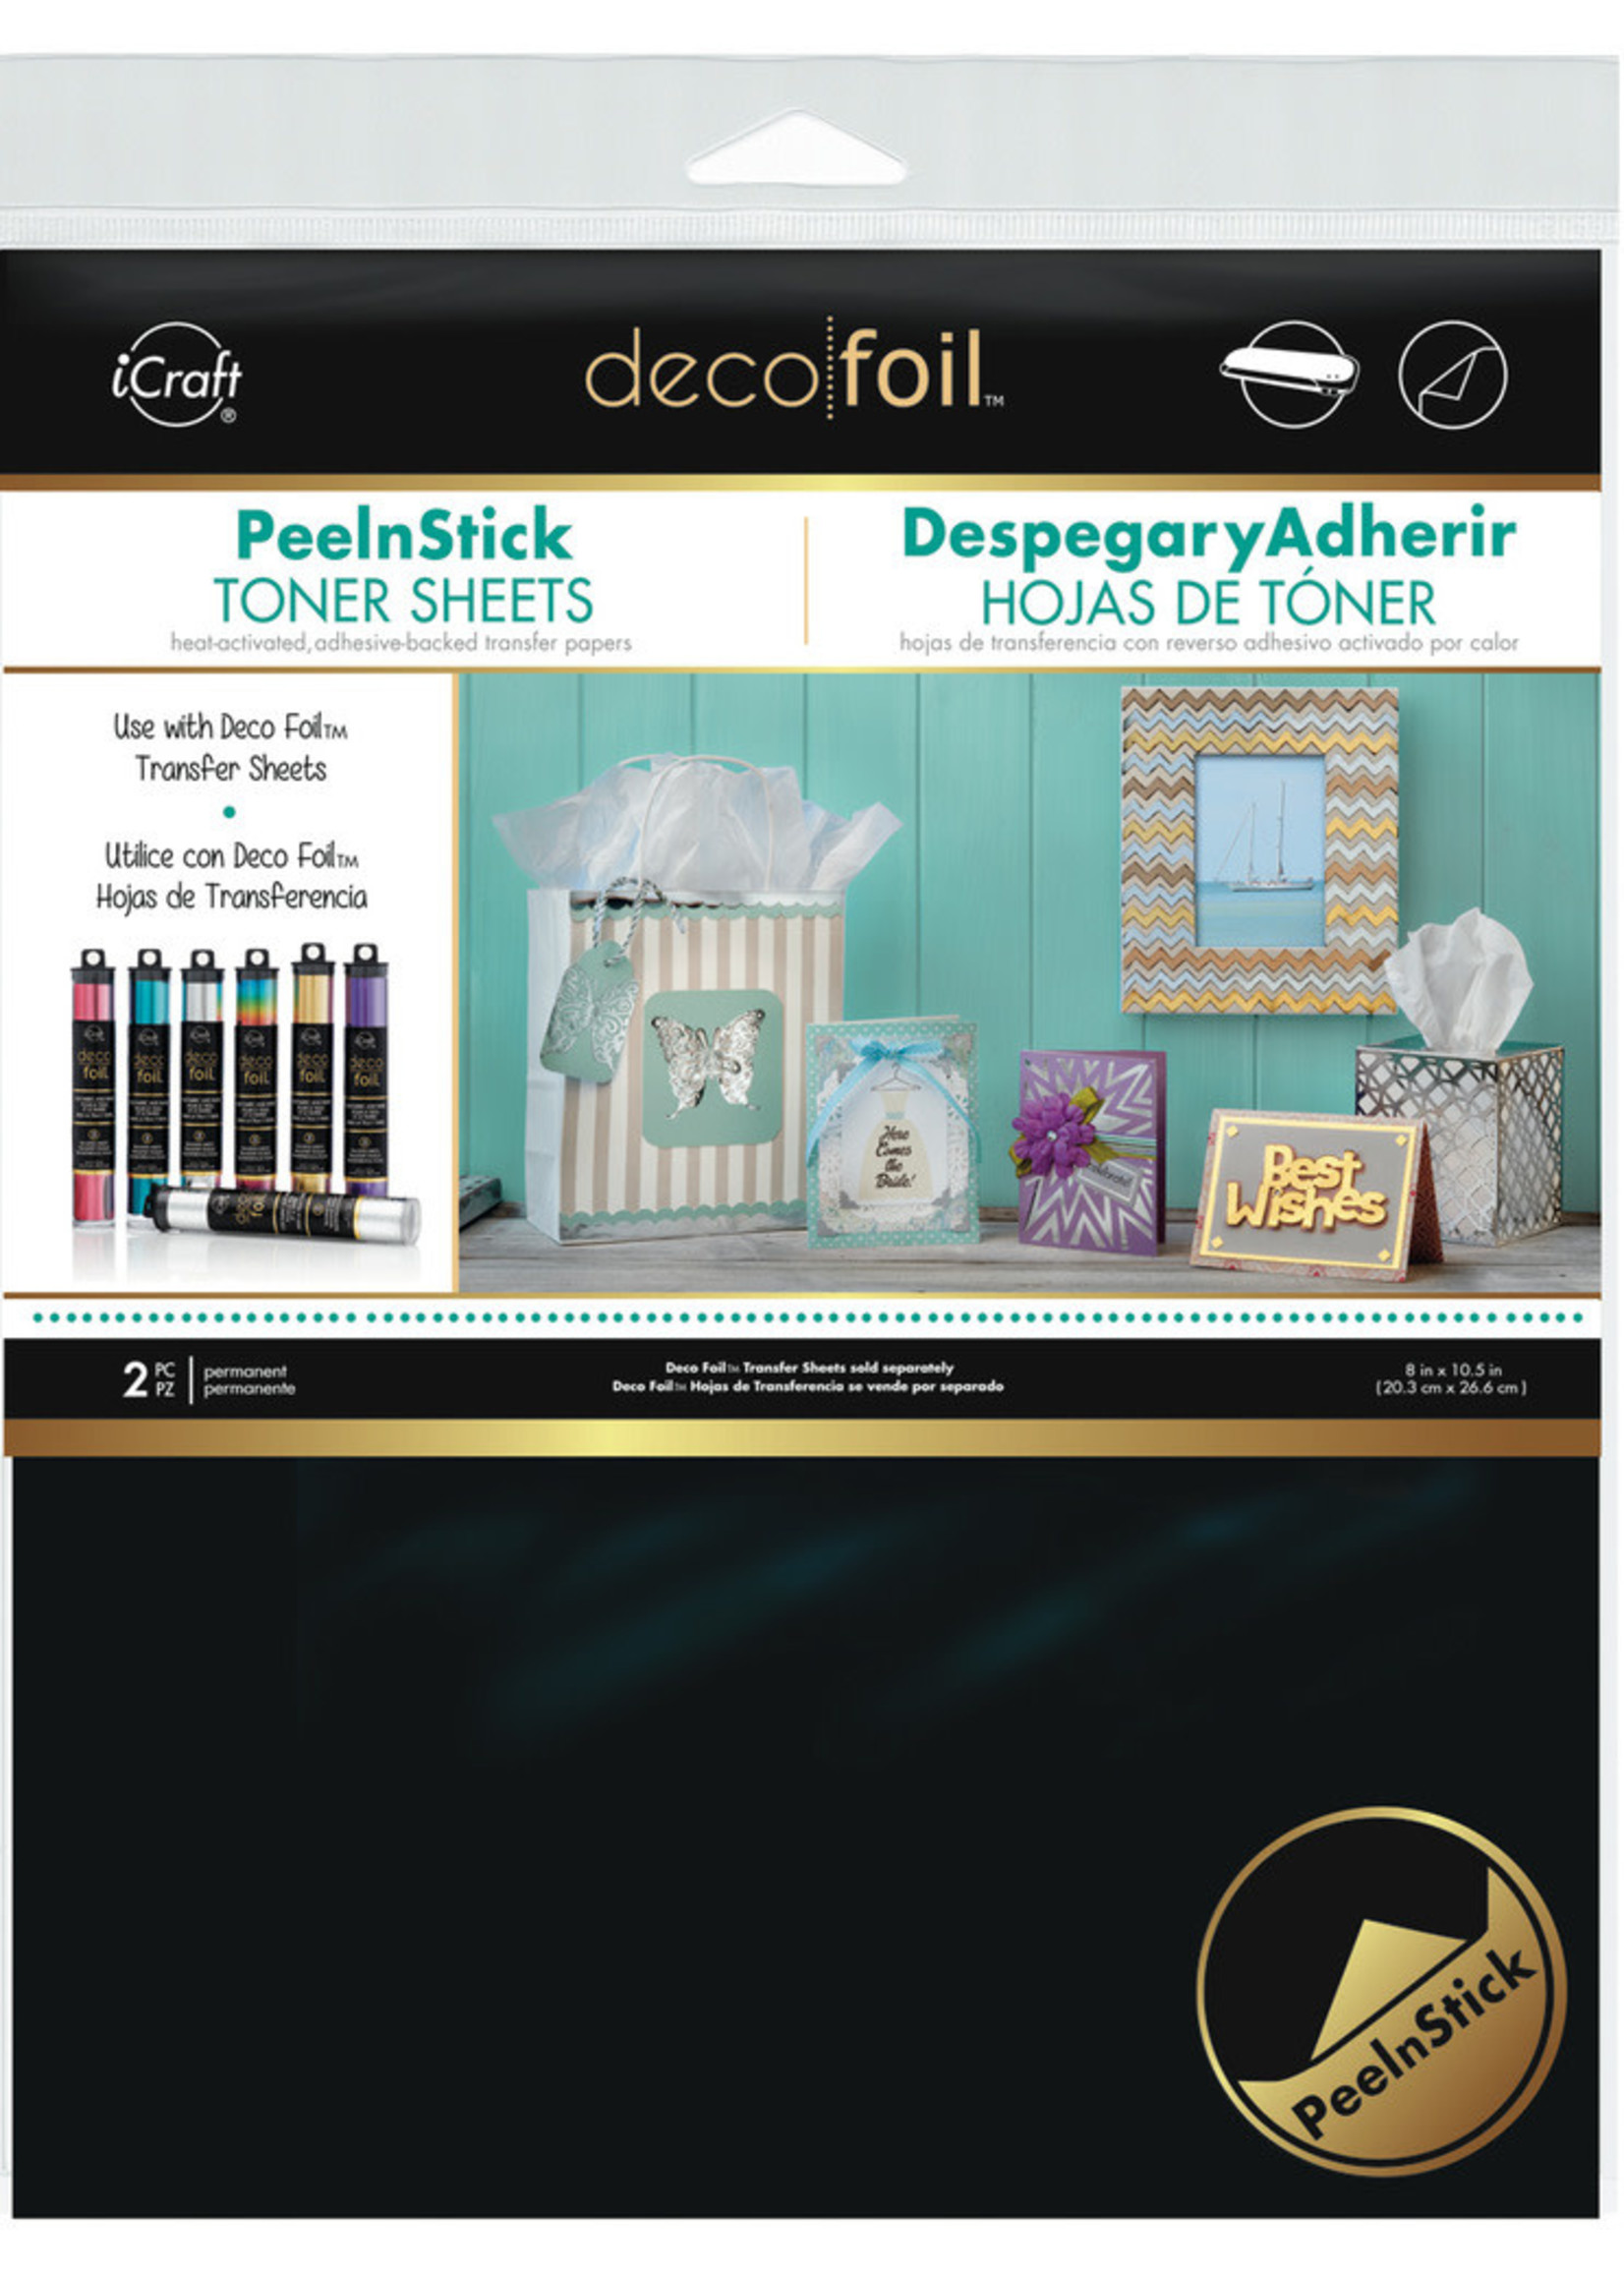 Decofoil PeelnStick Toner Sheets (2)